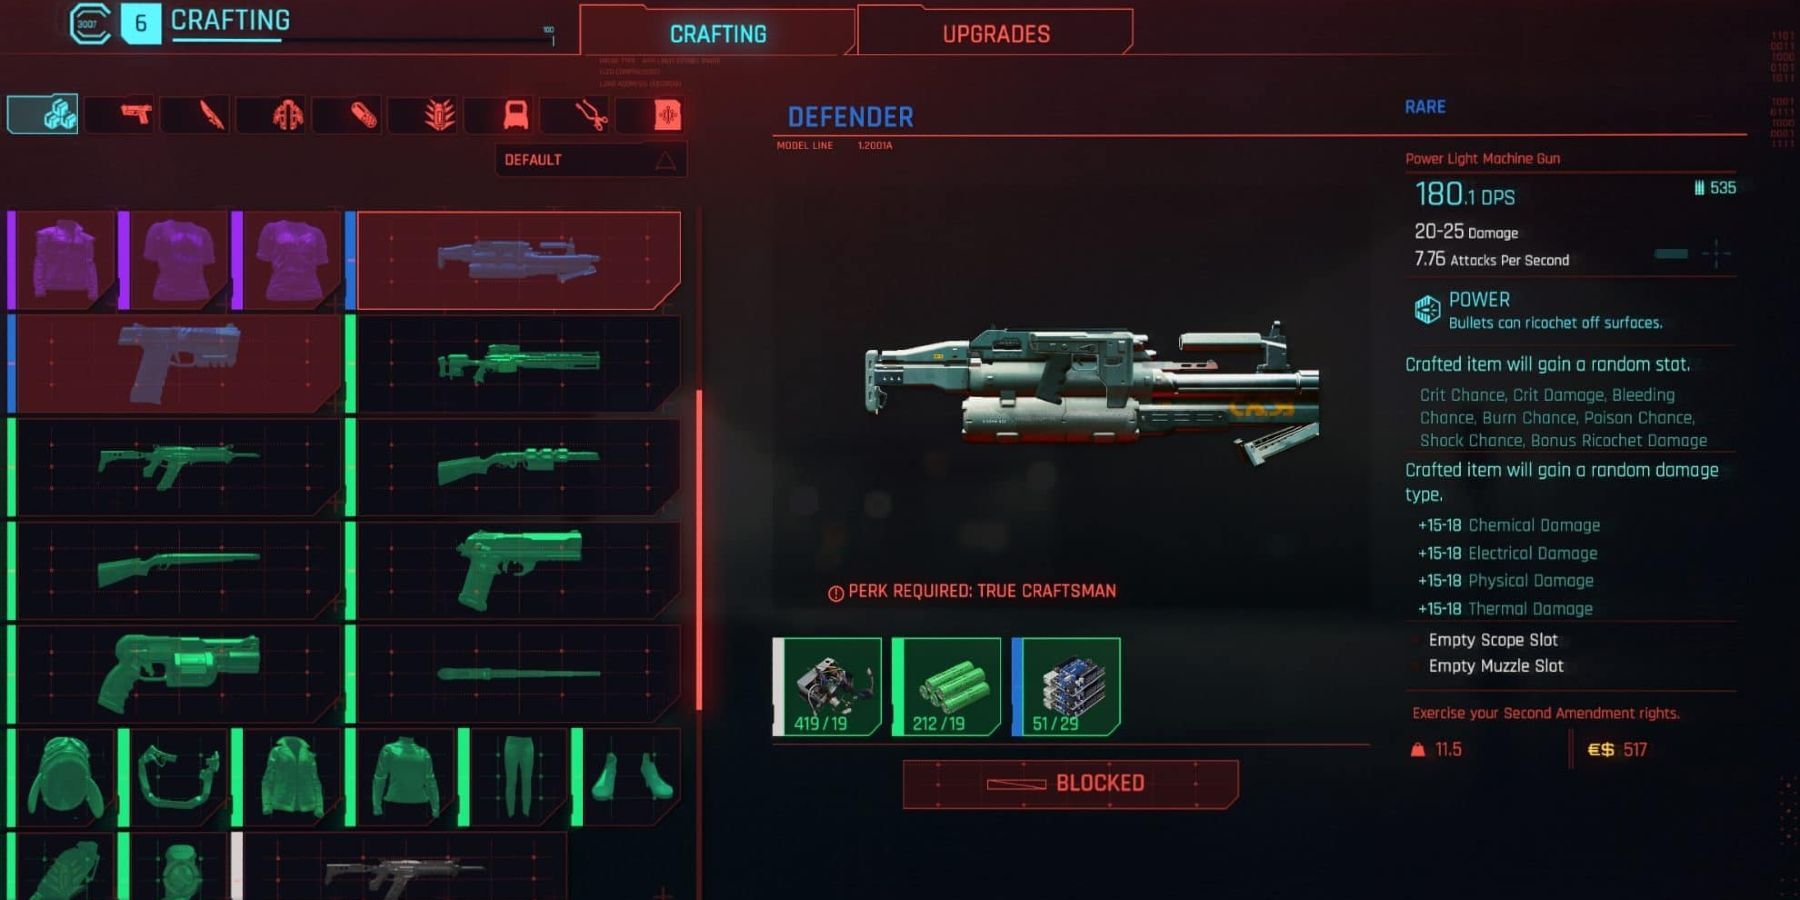 Cyberpunk 2077 crafting the defender gun